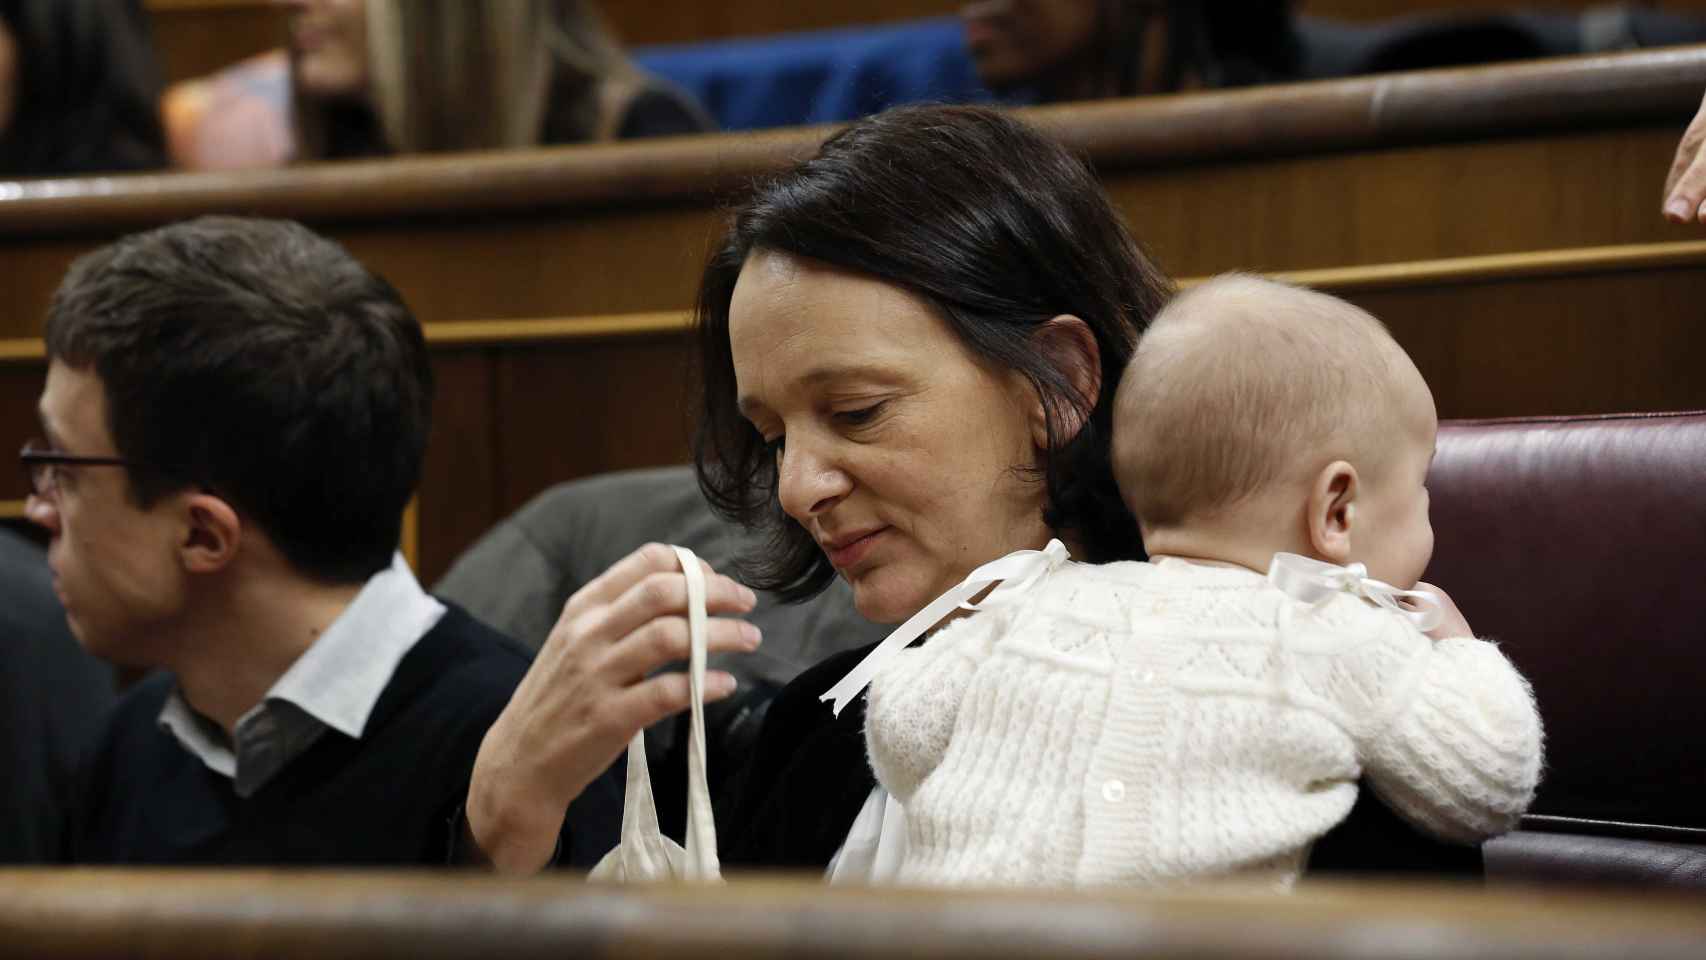 La diputada de Podemos Carolina Bescansa, con su bebé, e Iñigo Errejón a su derecha.